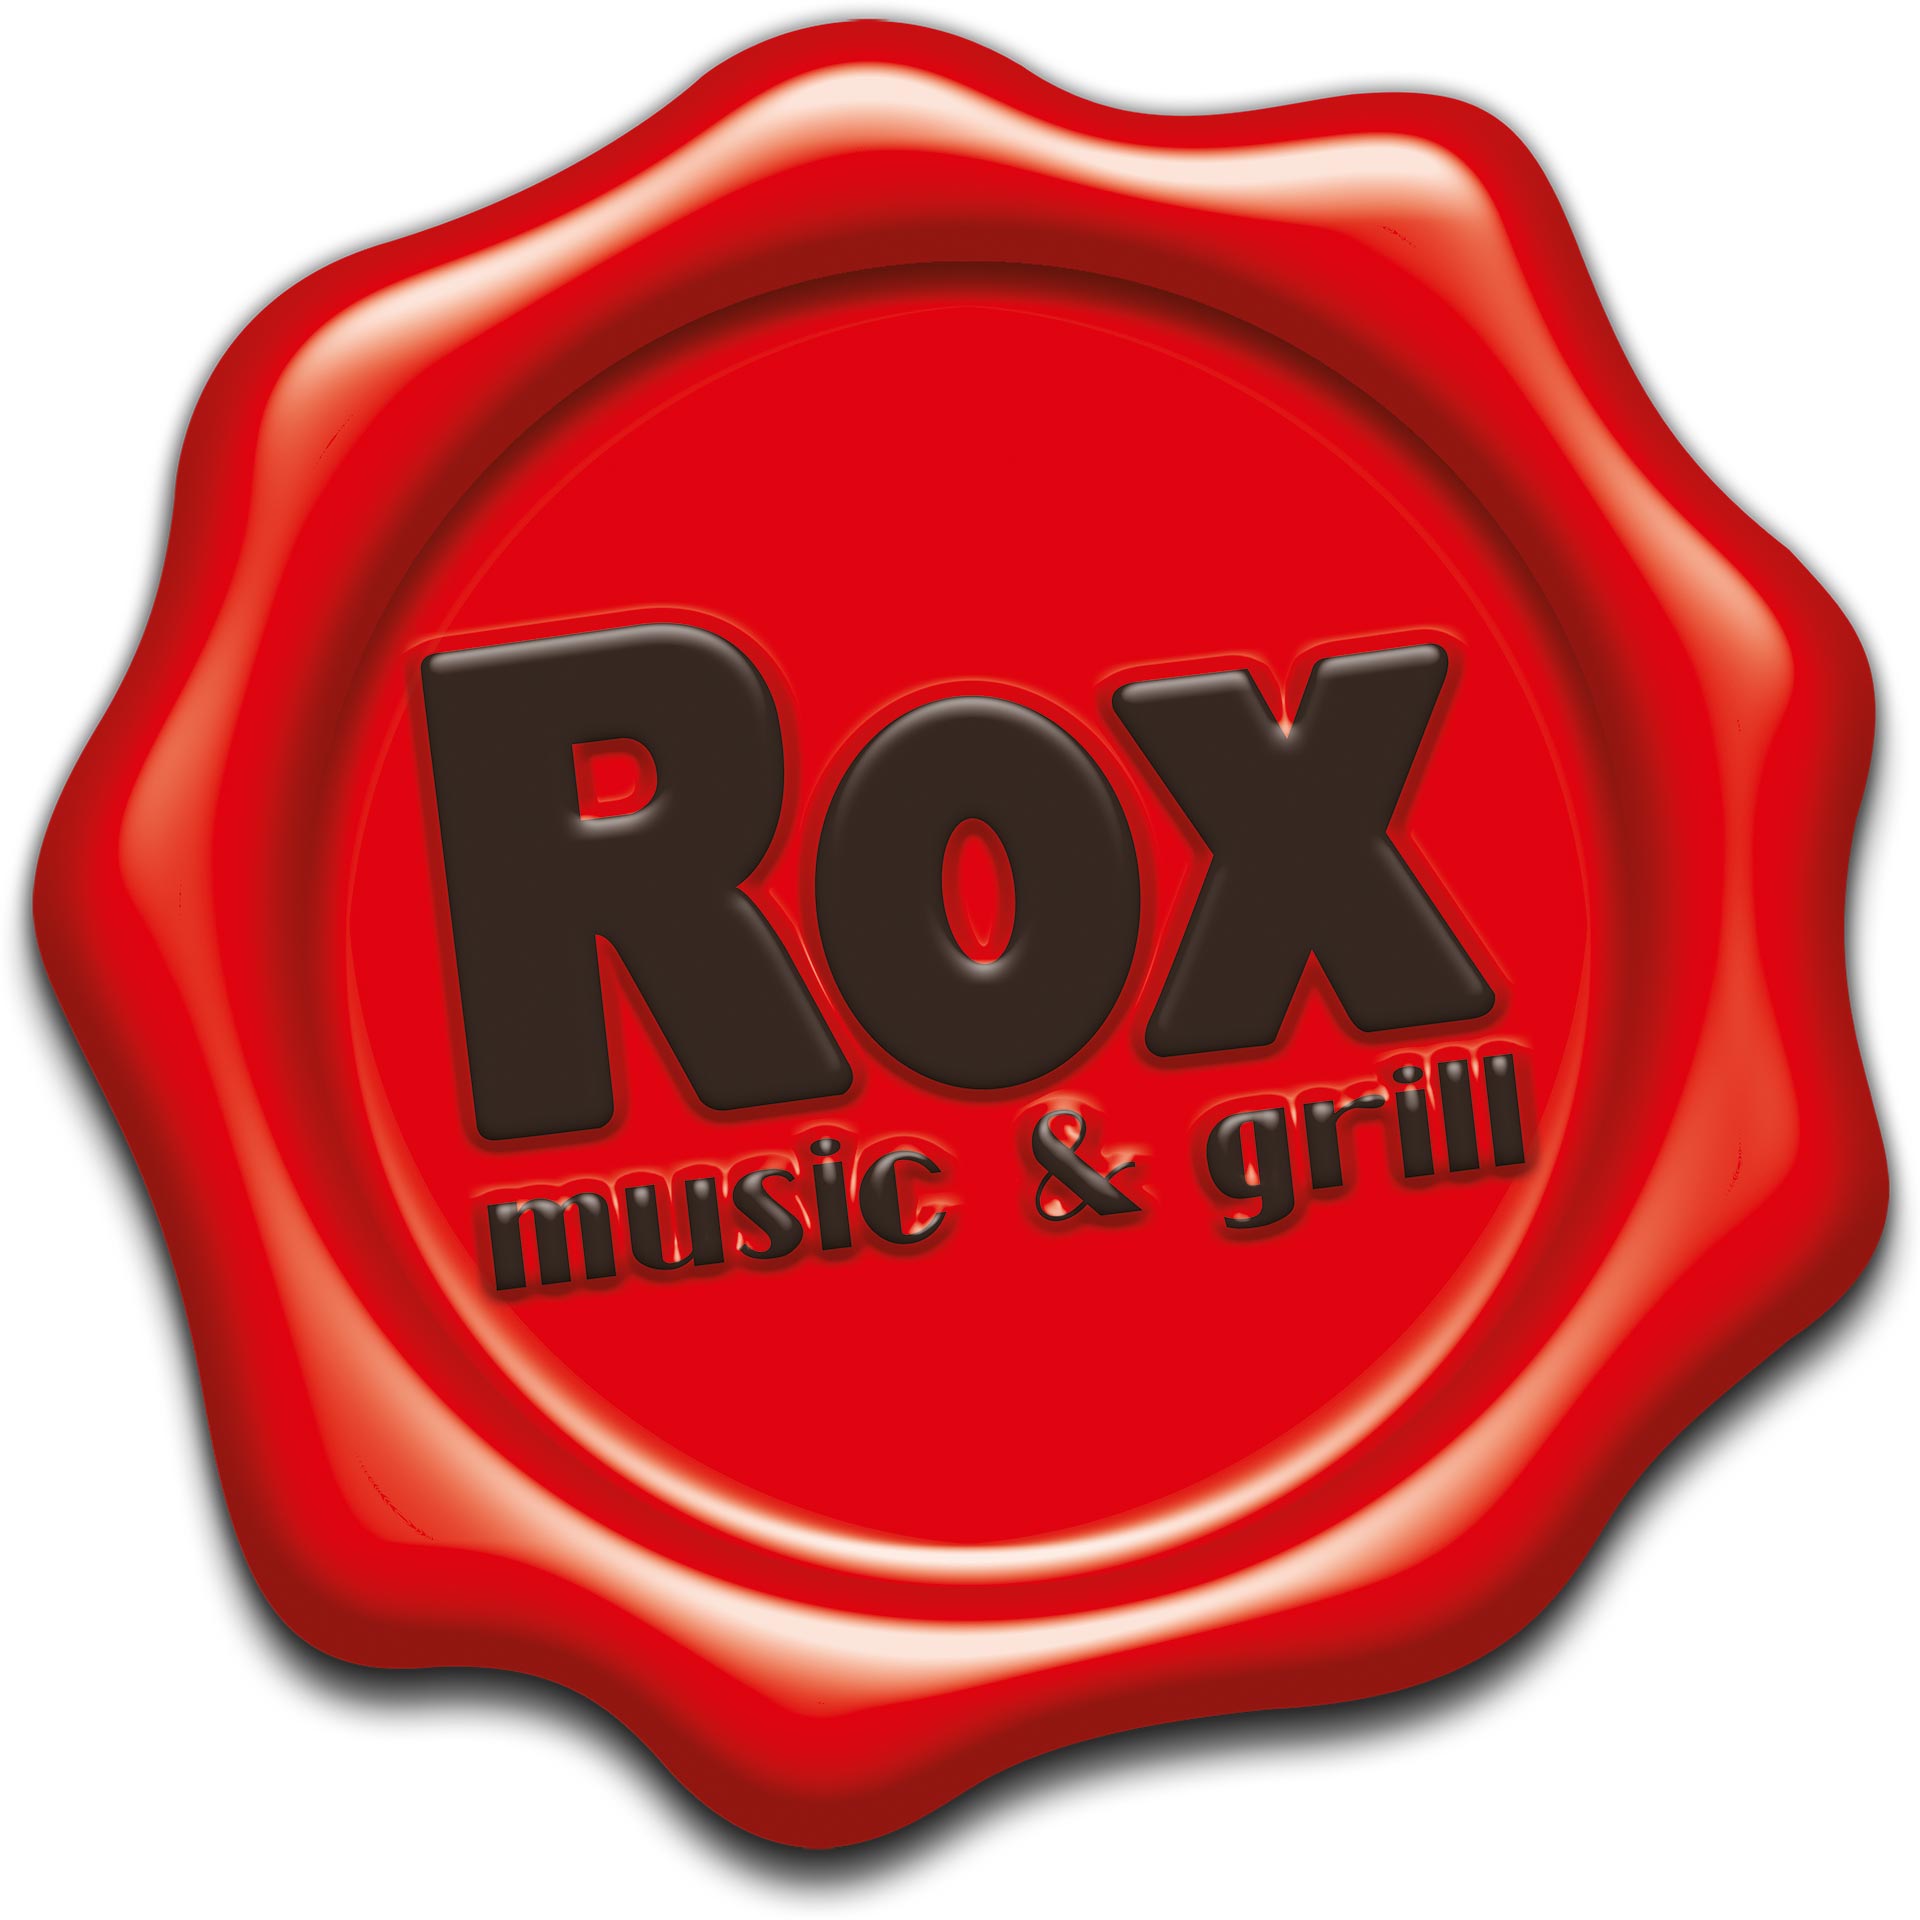 Rox Music & Grill